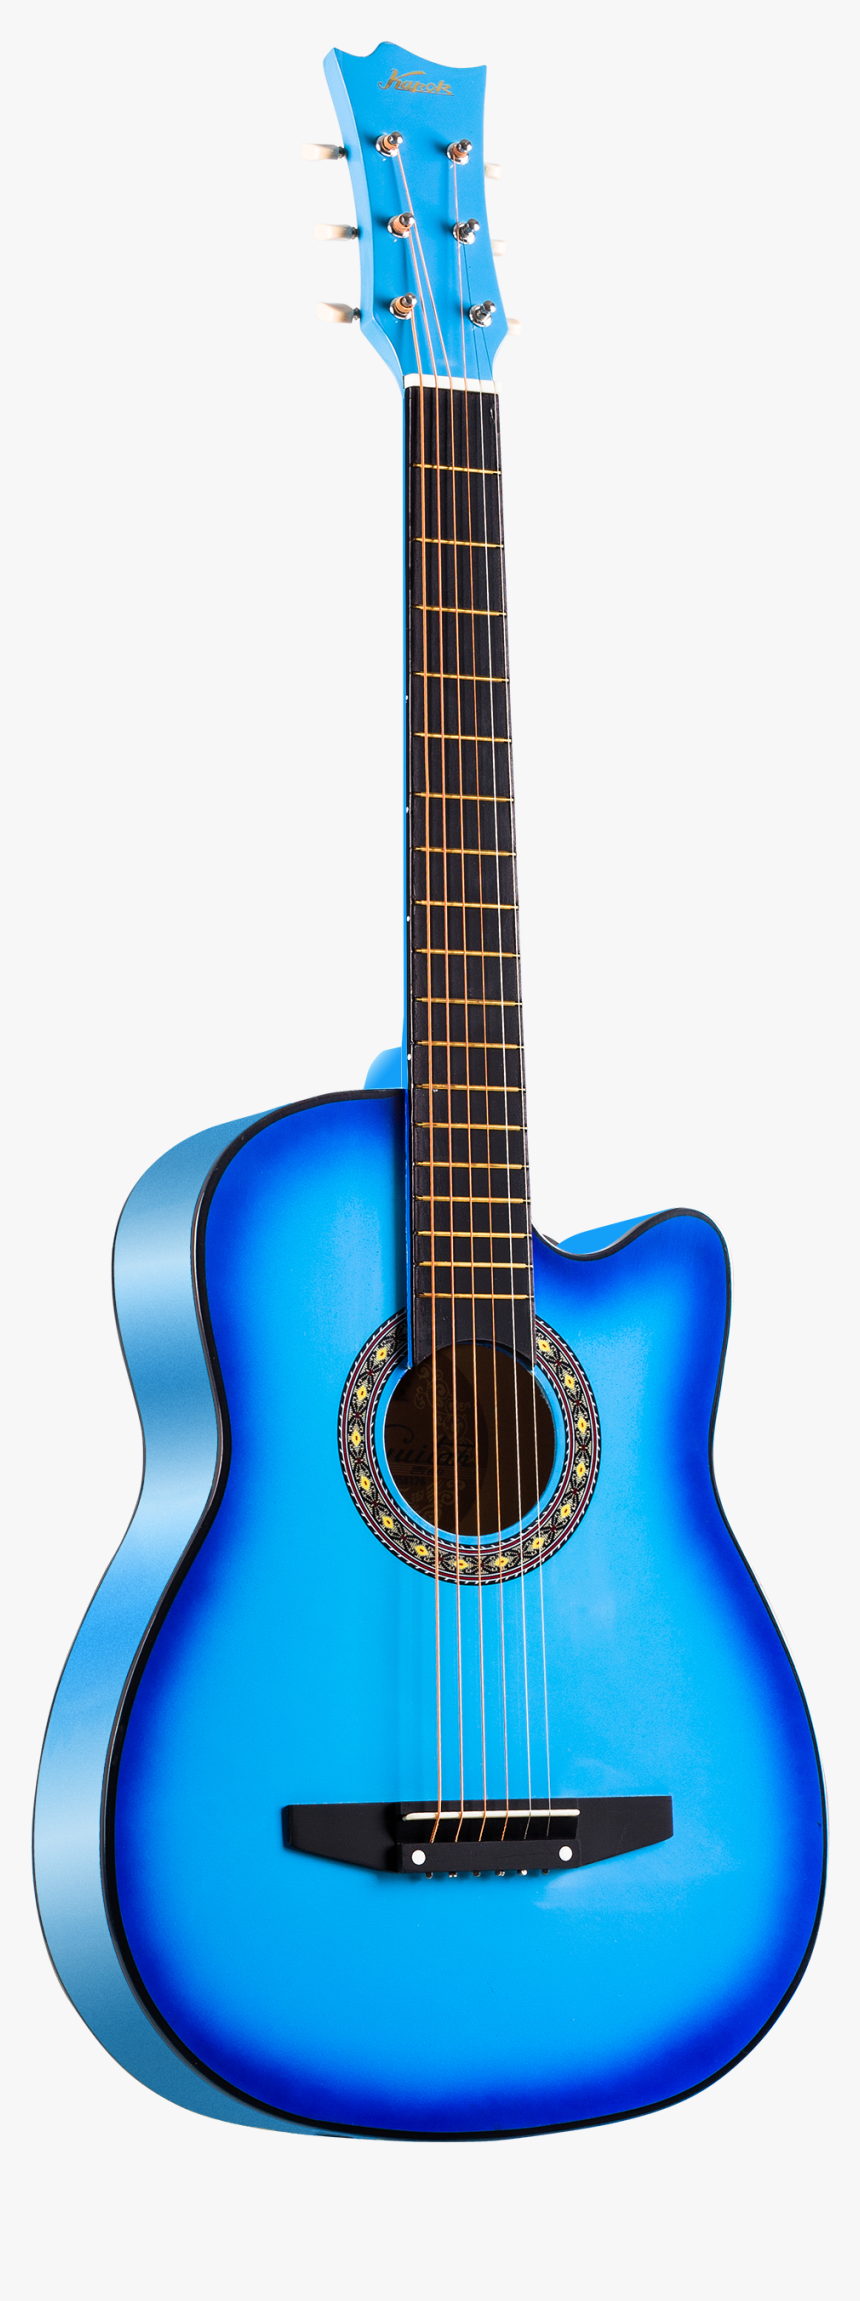 Blue Tiple Guitar Instrument Acoustic-electric Acoustic - Picsart Blue Guitar Png, Transparent Png, Free Download